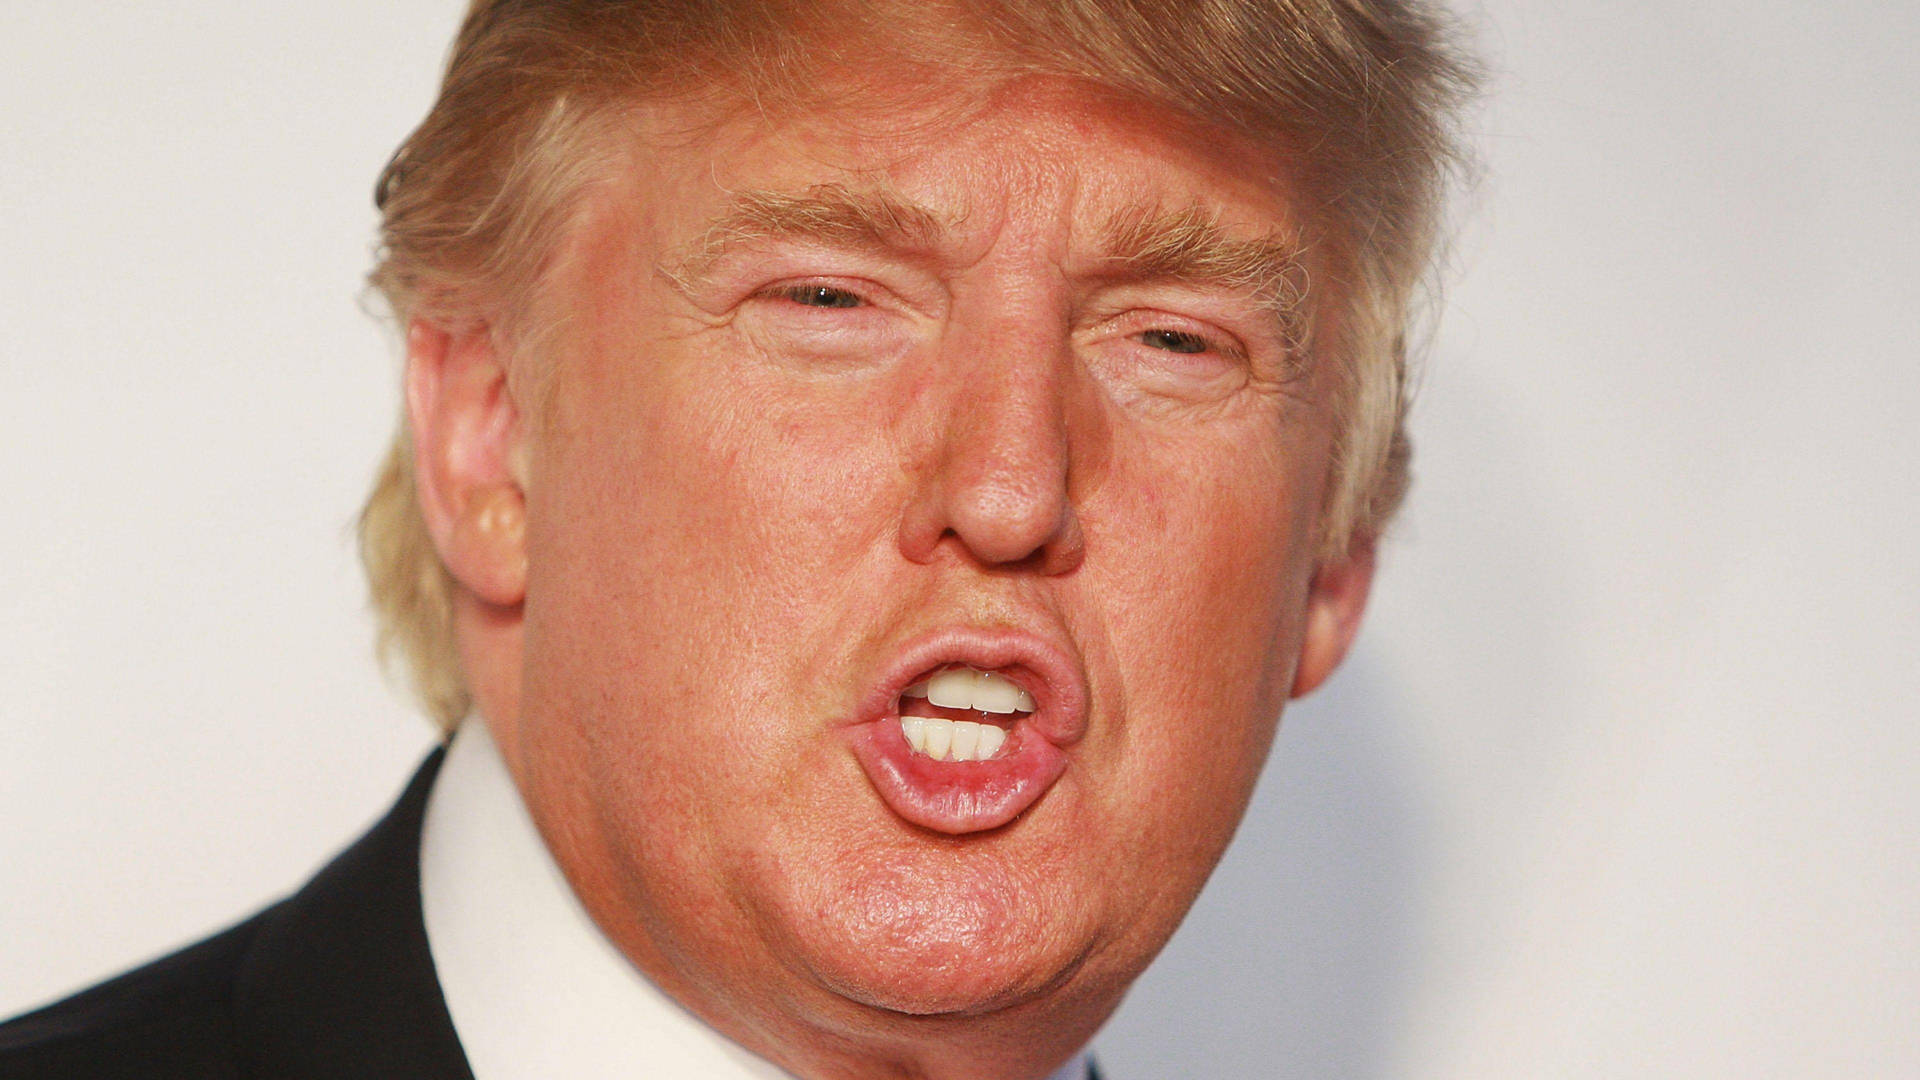 Donald Trump Pursing Lips Wallpaper